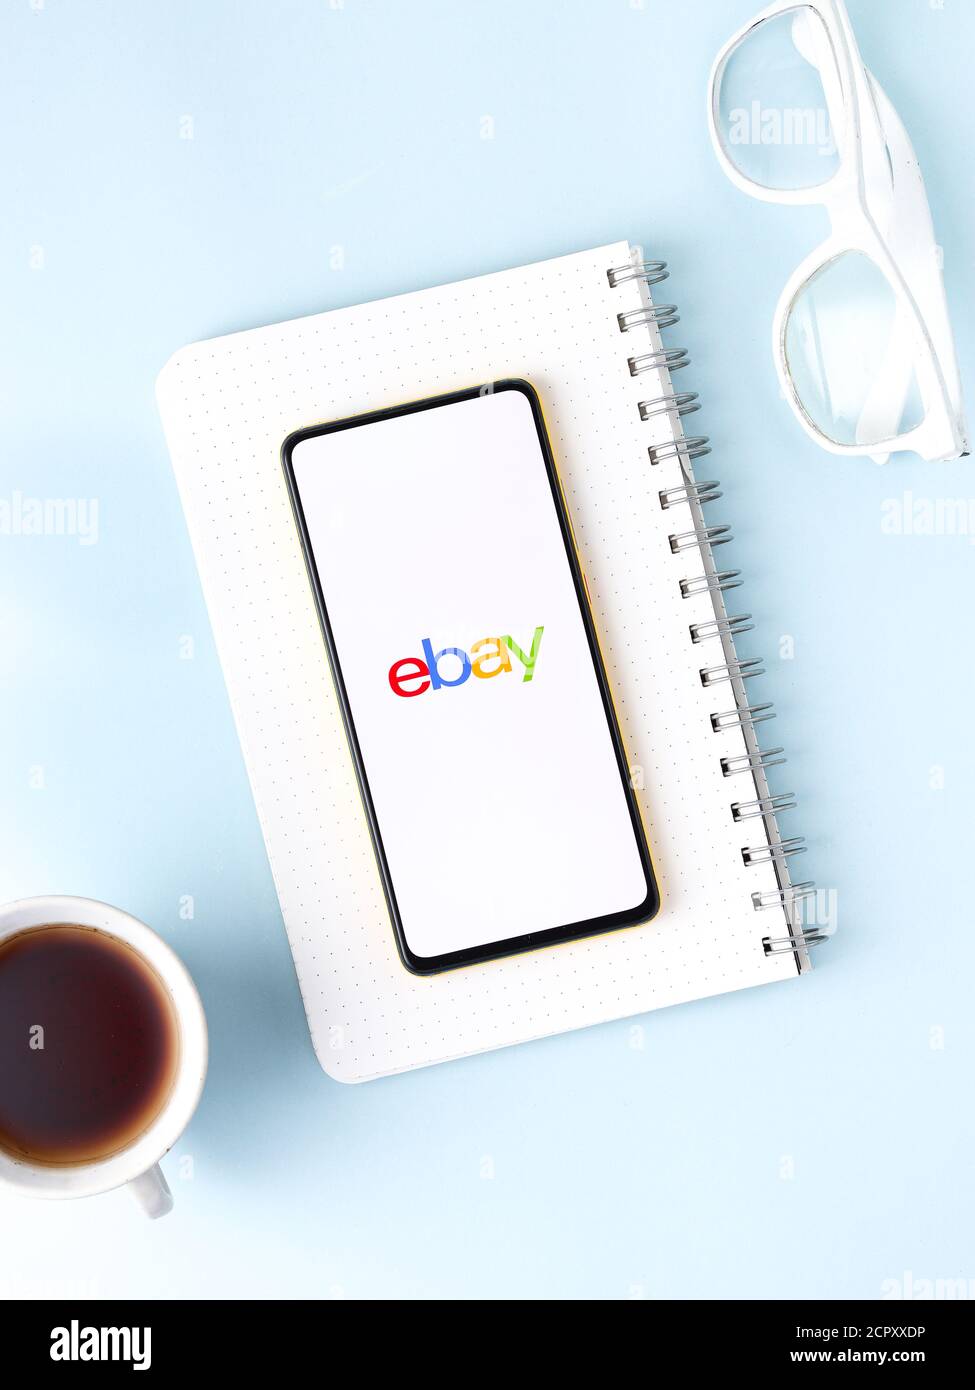 Assam, india - September 12, 2020 : Ebay logo on phone screen stock image. Stock Photo